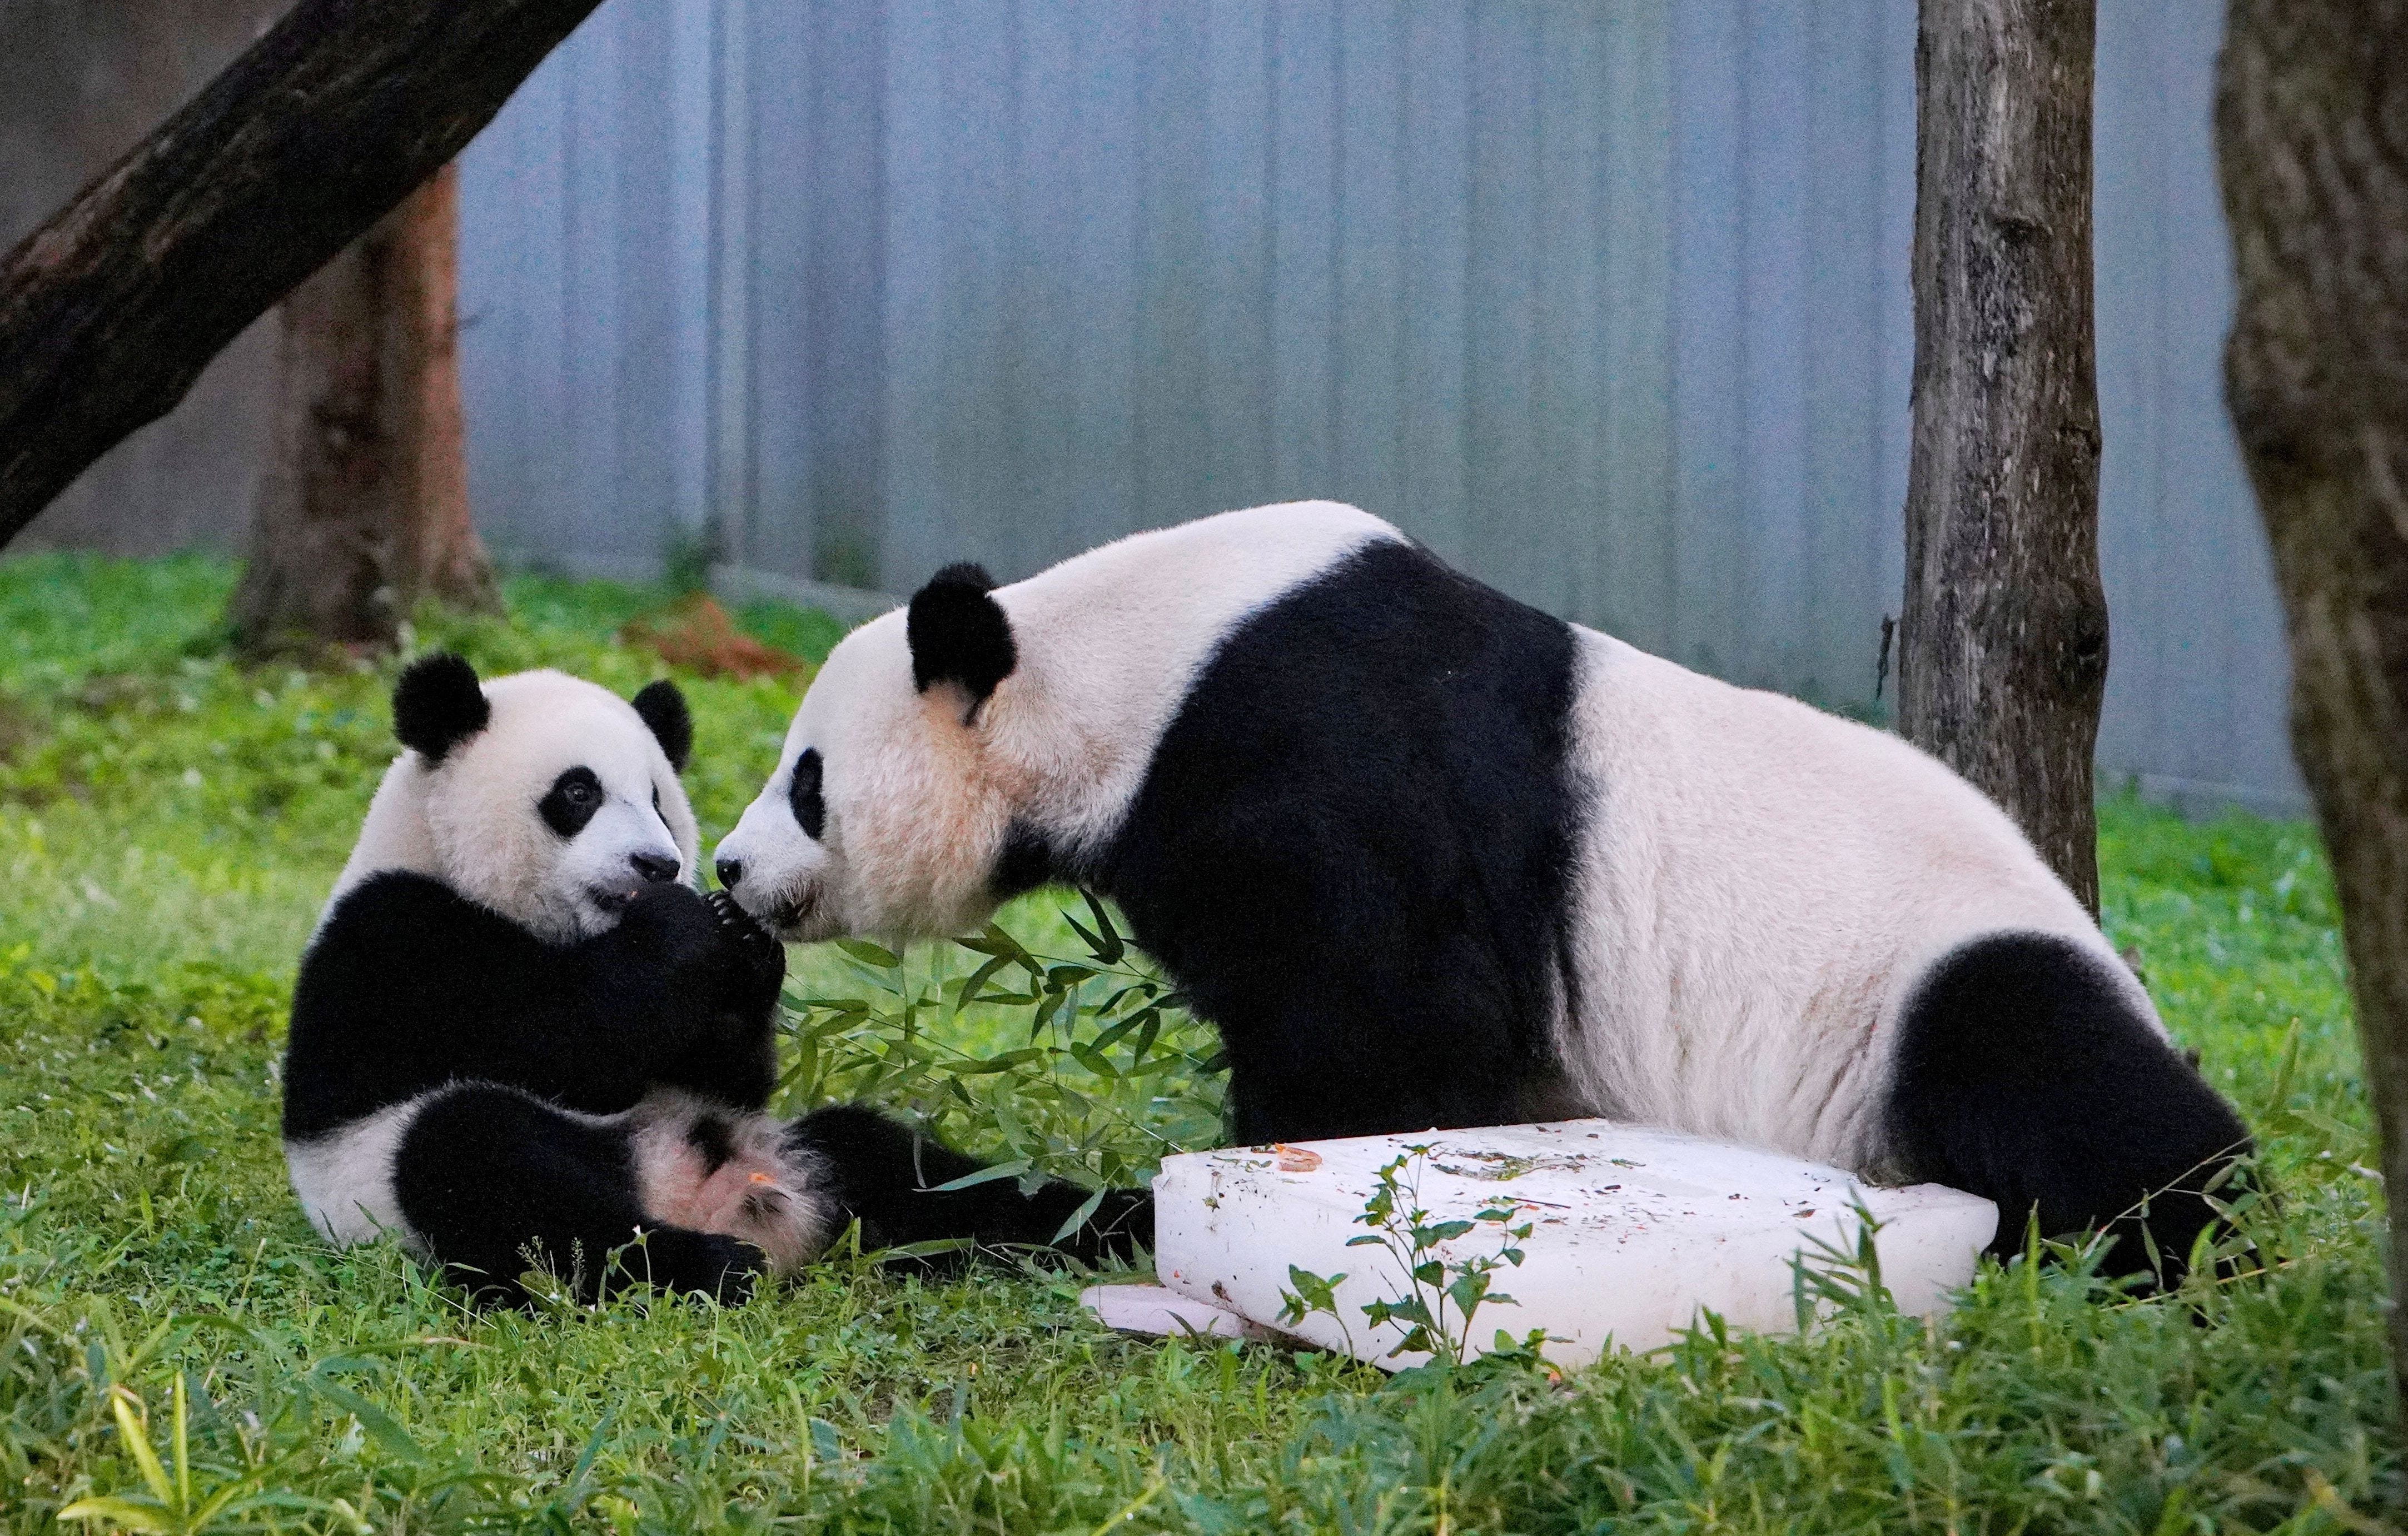 Pandababy Xiao Qi Ji (l.) feiert am 21. August 2021 seinen ersten Geburtstag mit seiner Mutter Mei Xiang im National Zoo in Washington, D.C.